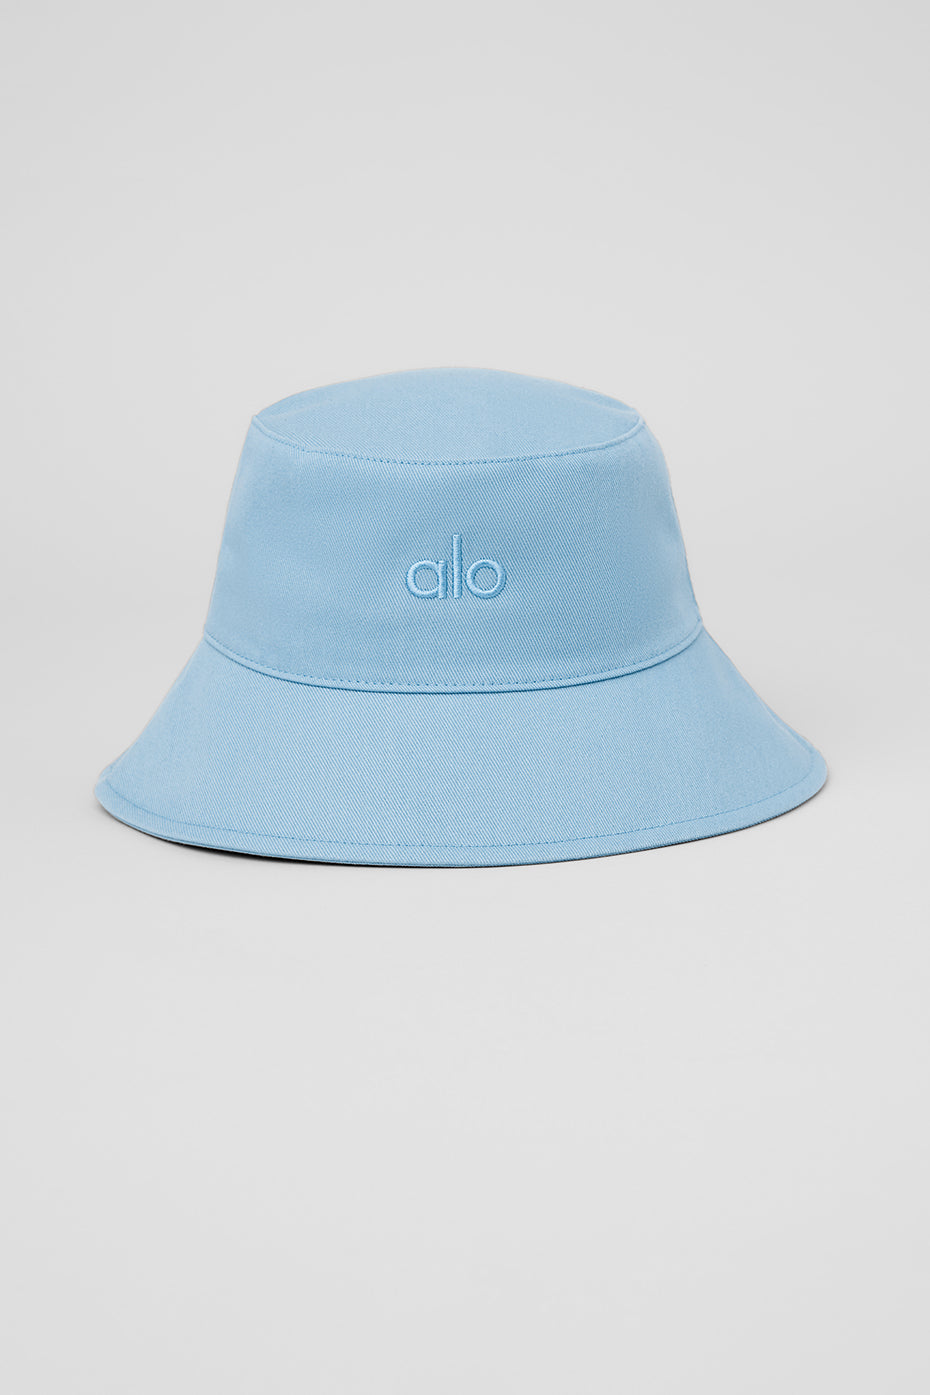 Shop ALO Yoga Unisex Street Style Bucket Hats Wide-brimmed Hats by ROBEL59